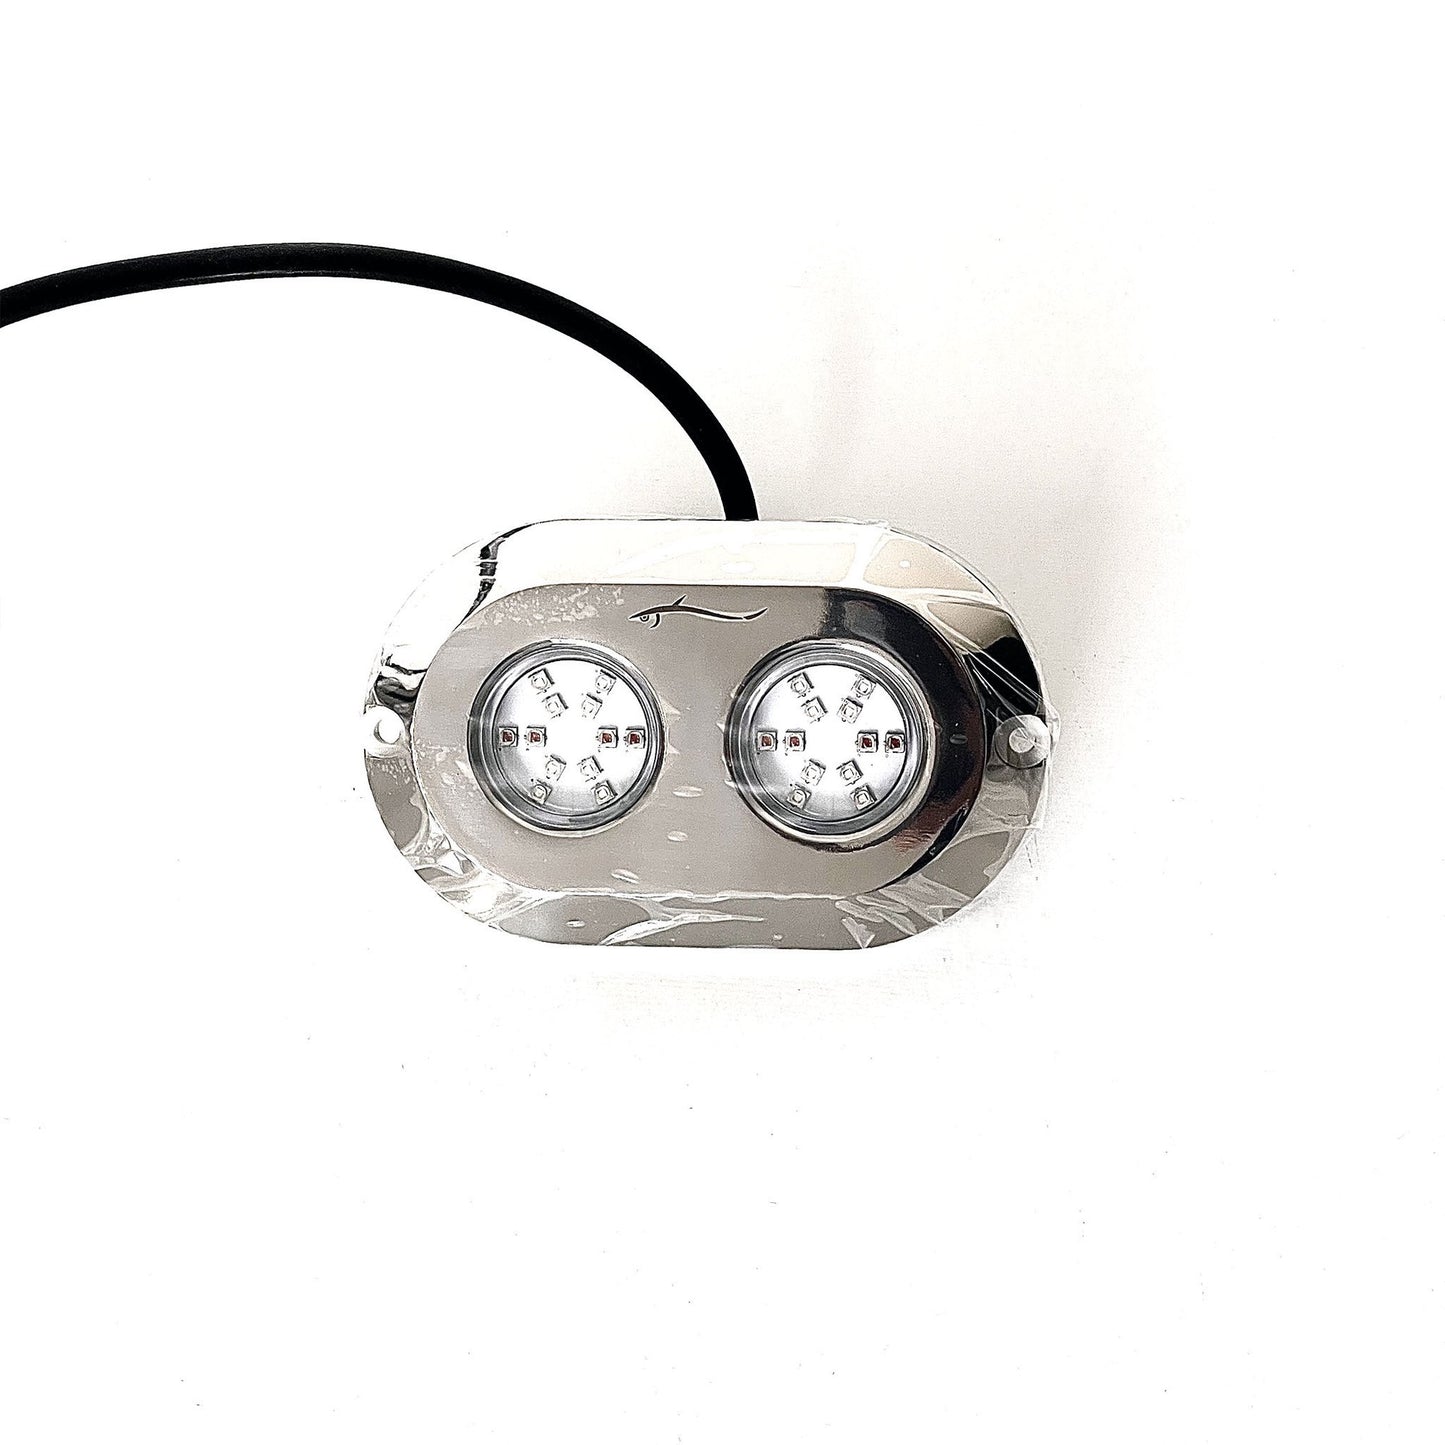 120 Watt 2 Pod Underwater LED RGB Stainless Steel Light top angle packaged